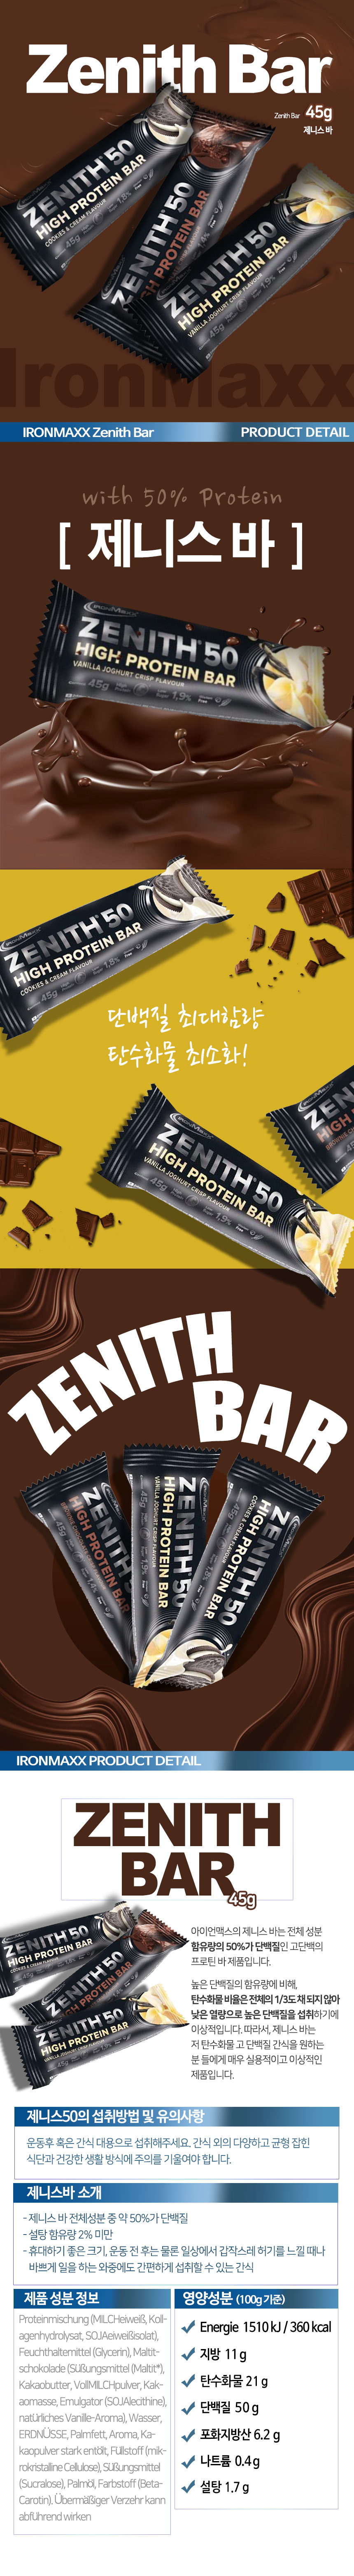 Zenith-Bar_153022.jpg